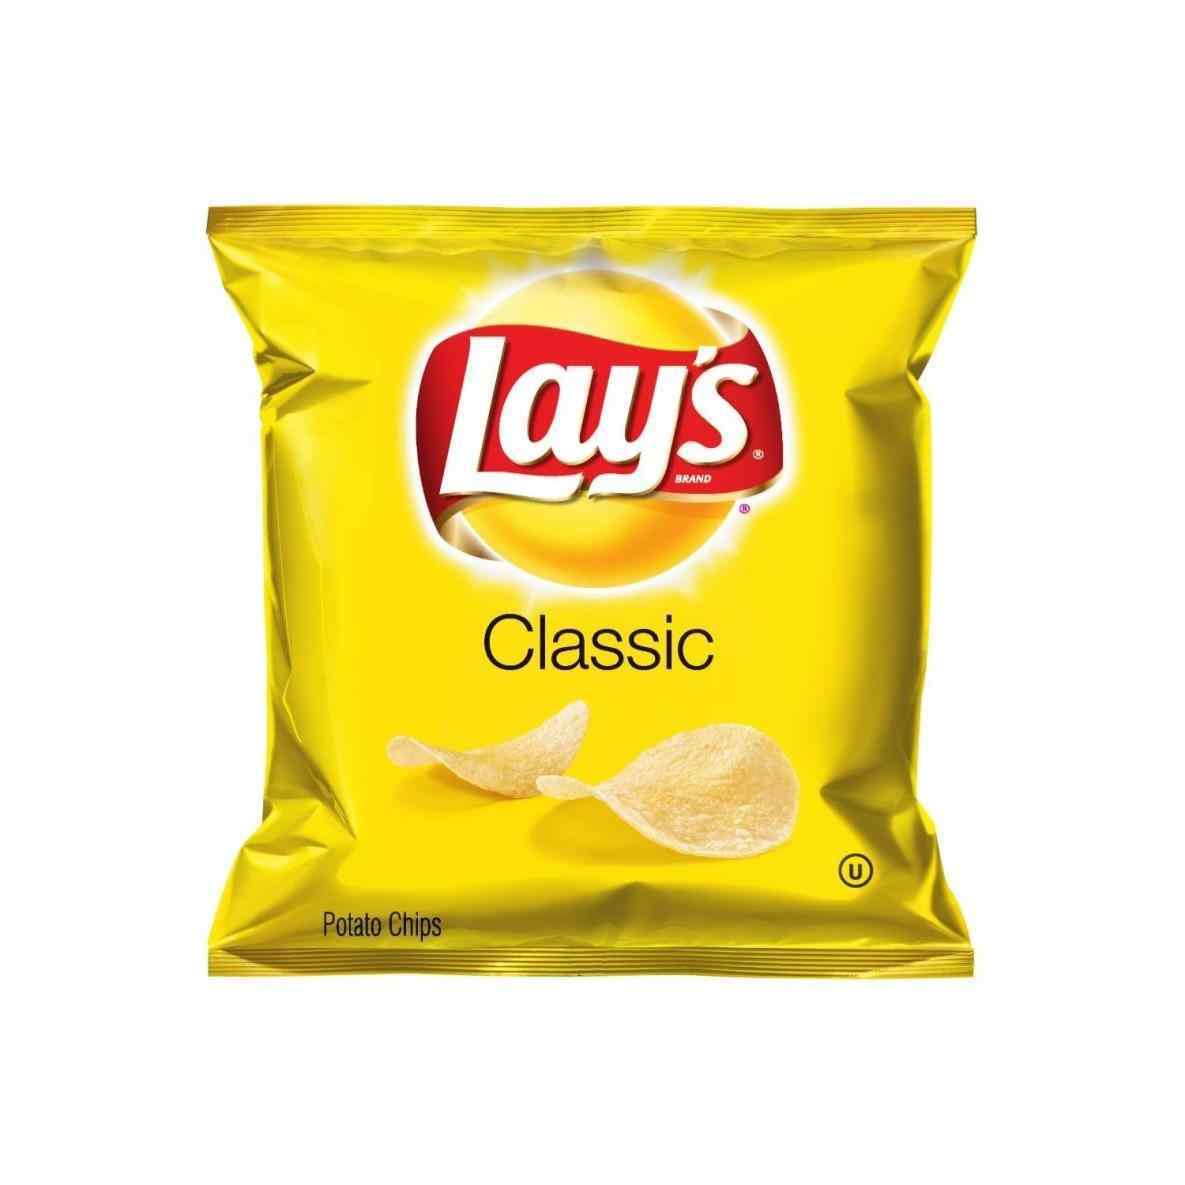 chips clipart bag chip